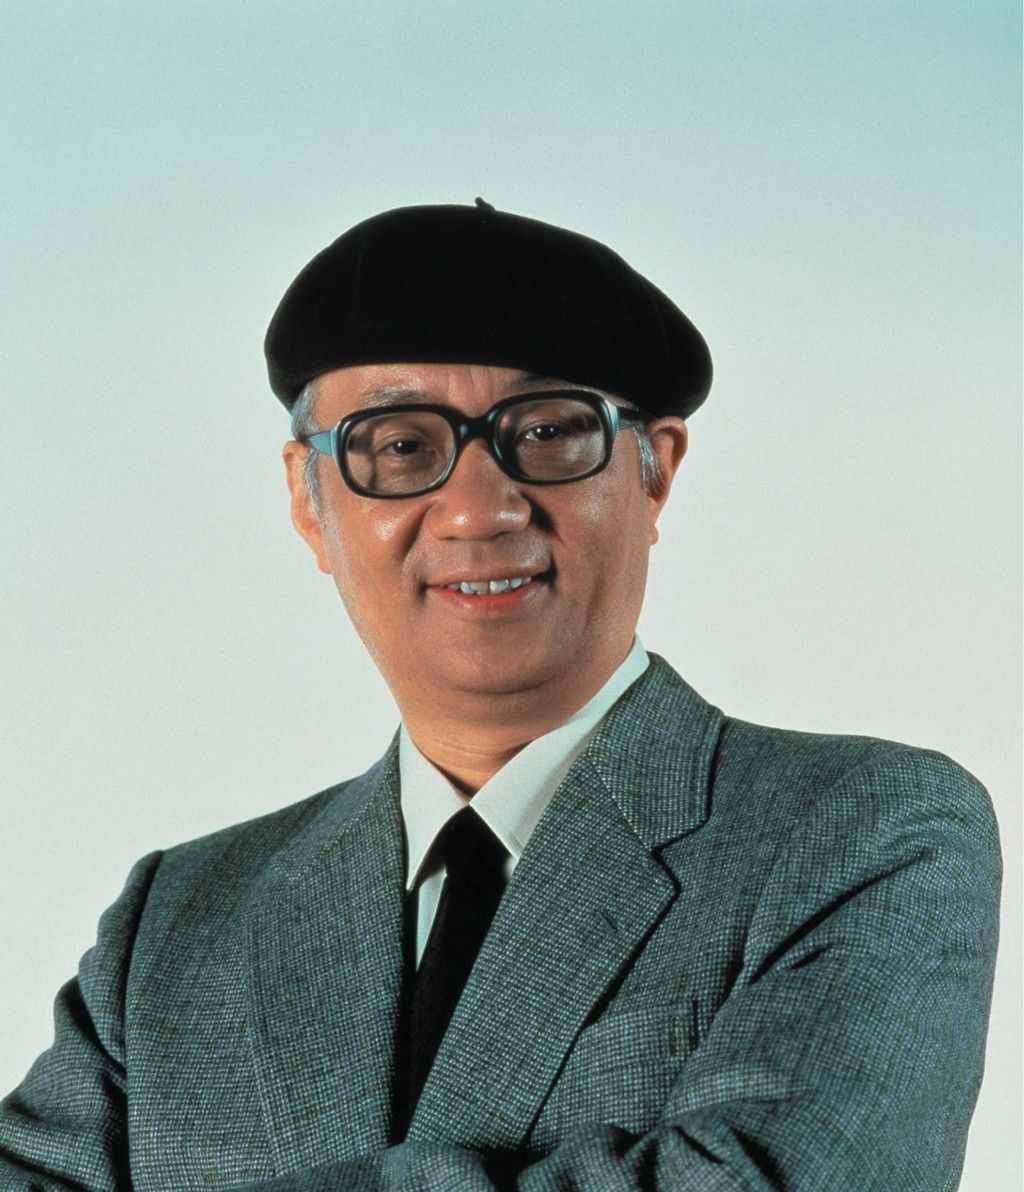 Image of Dr Osamu Tezuka from IMDB - https://www.imdb.com/name/nm0856804/mediaviewer/rm1342200064/